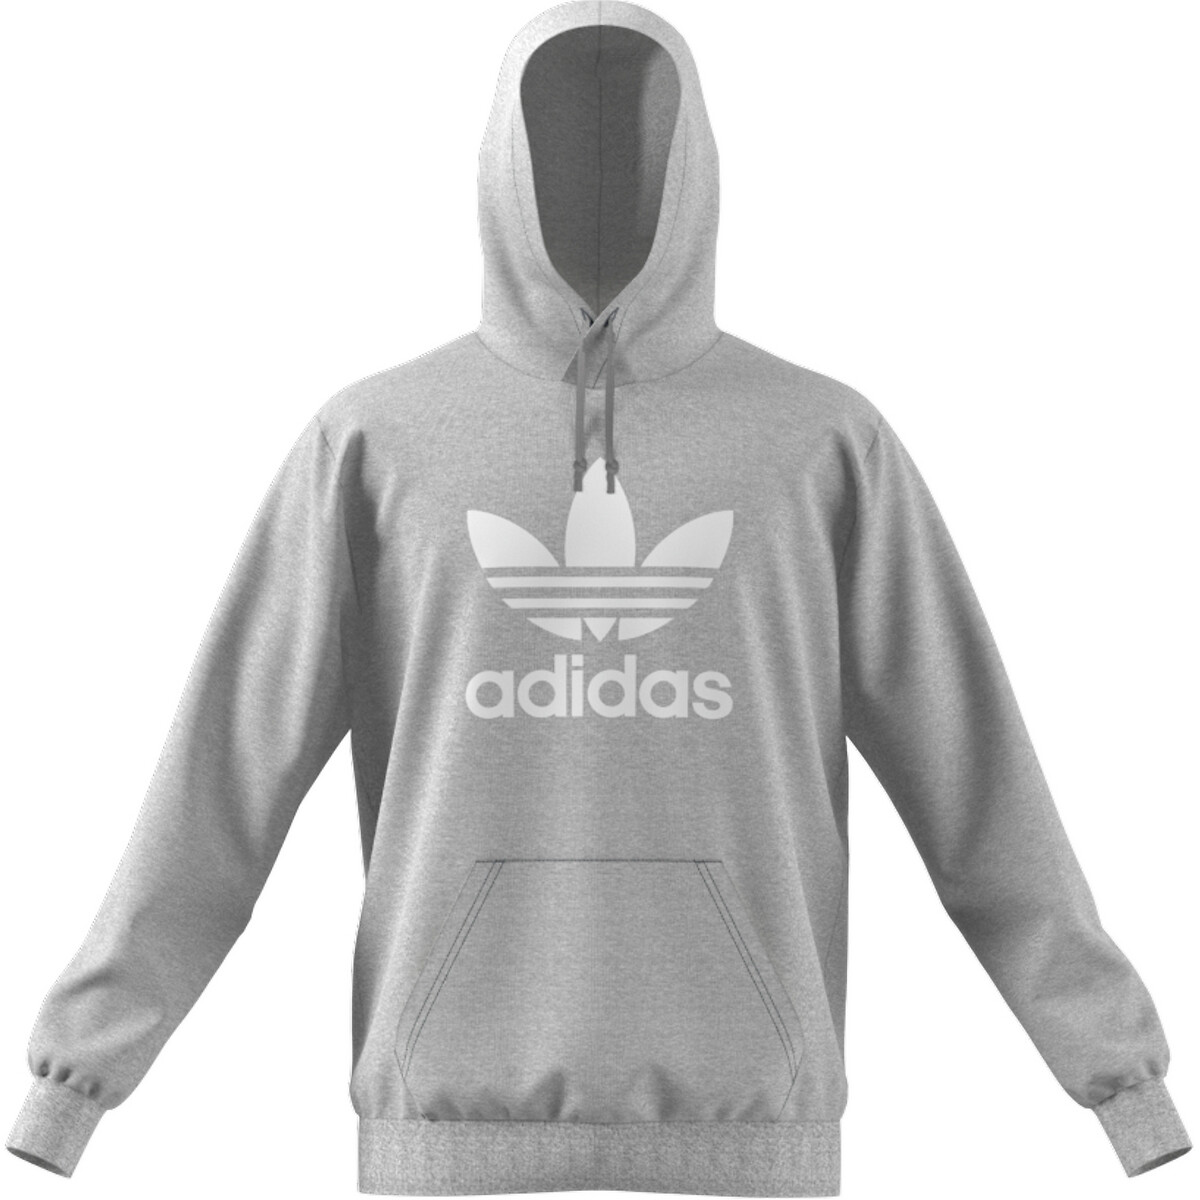 Cotton trefoil logo hoodie, Adidas Originals | Redoute